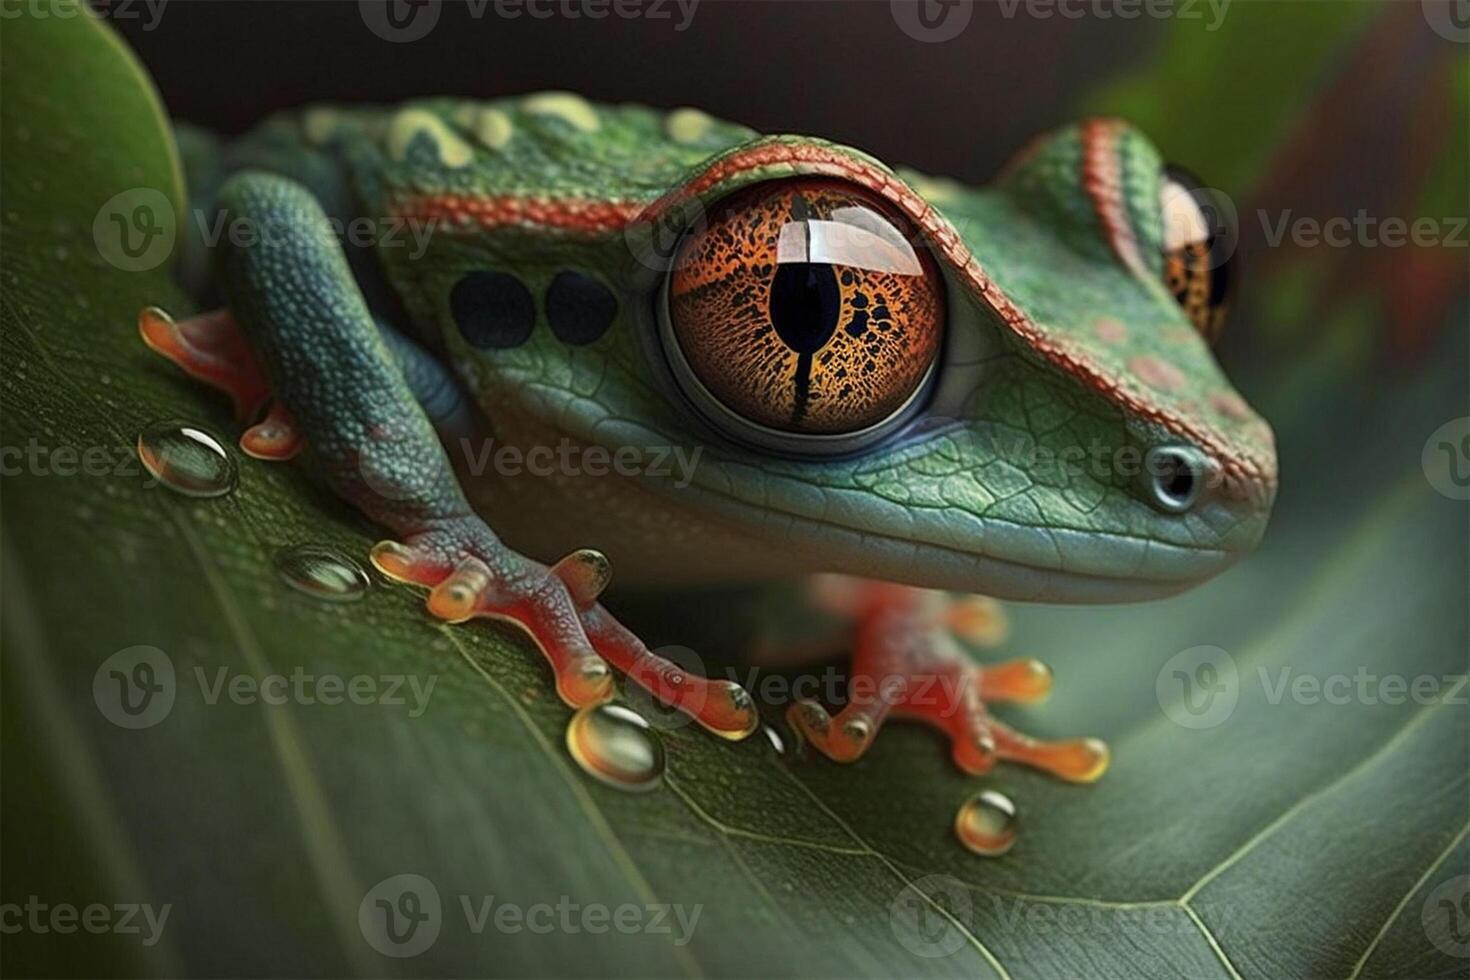 Red eyed tree frog hop on leaf. Amphibian closeup macro portrait. illustration. photo